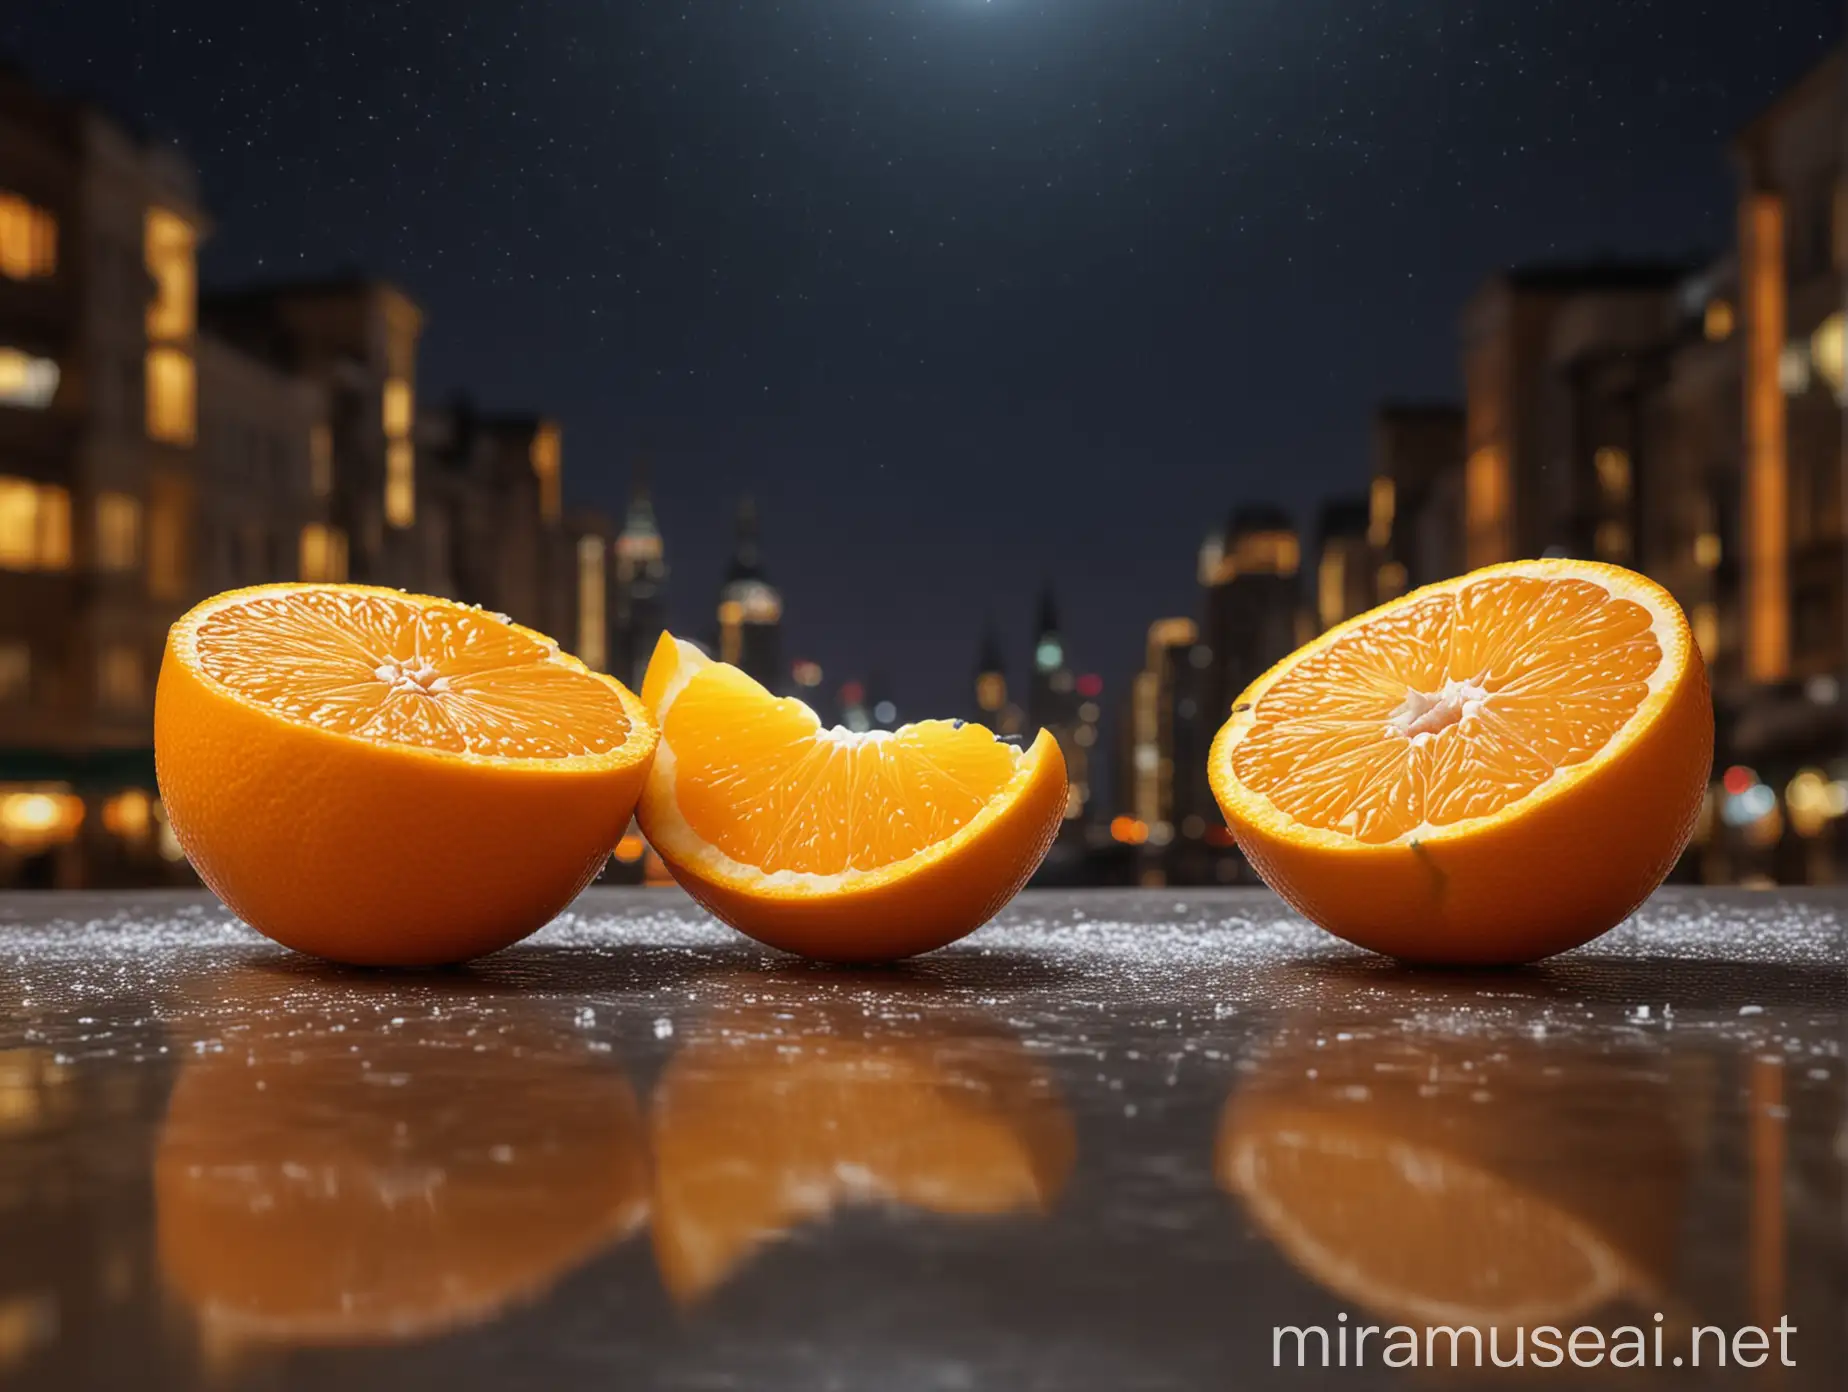 Orange Halves Illuminated by Night City Lights